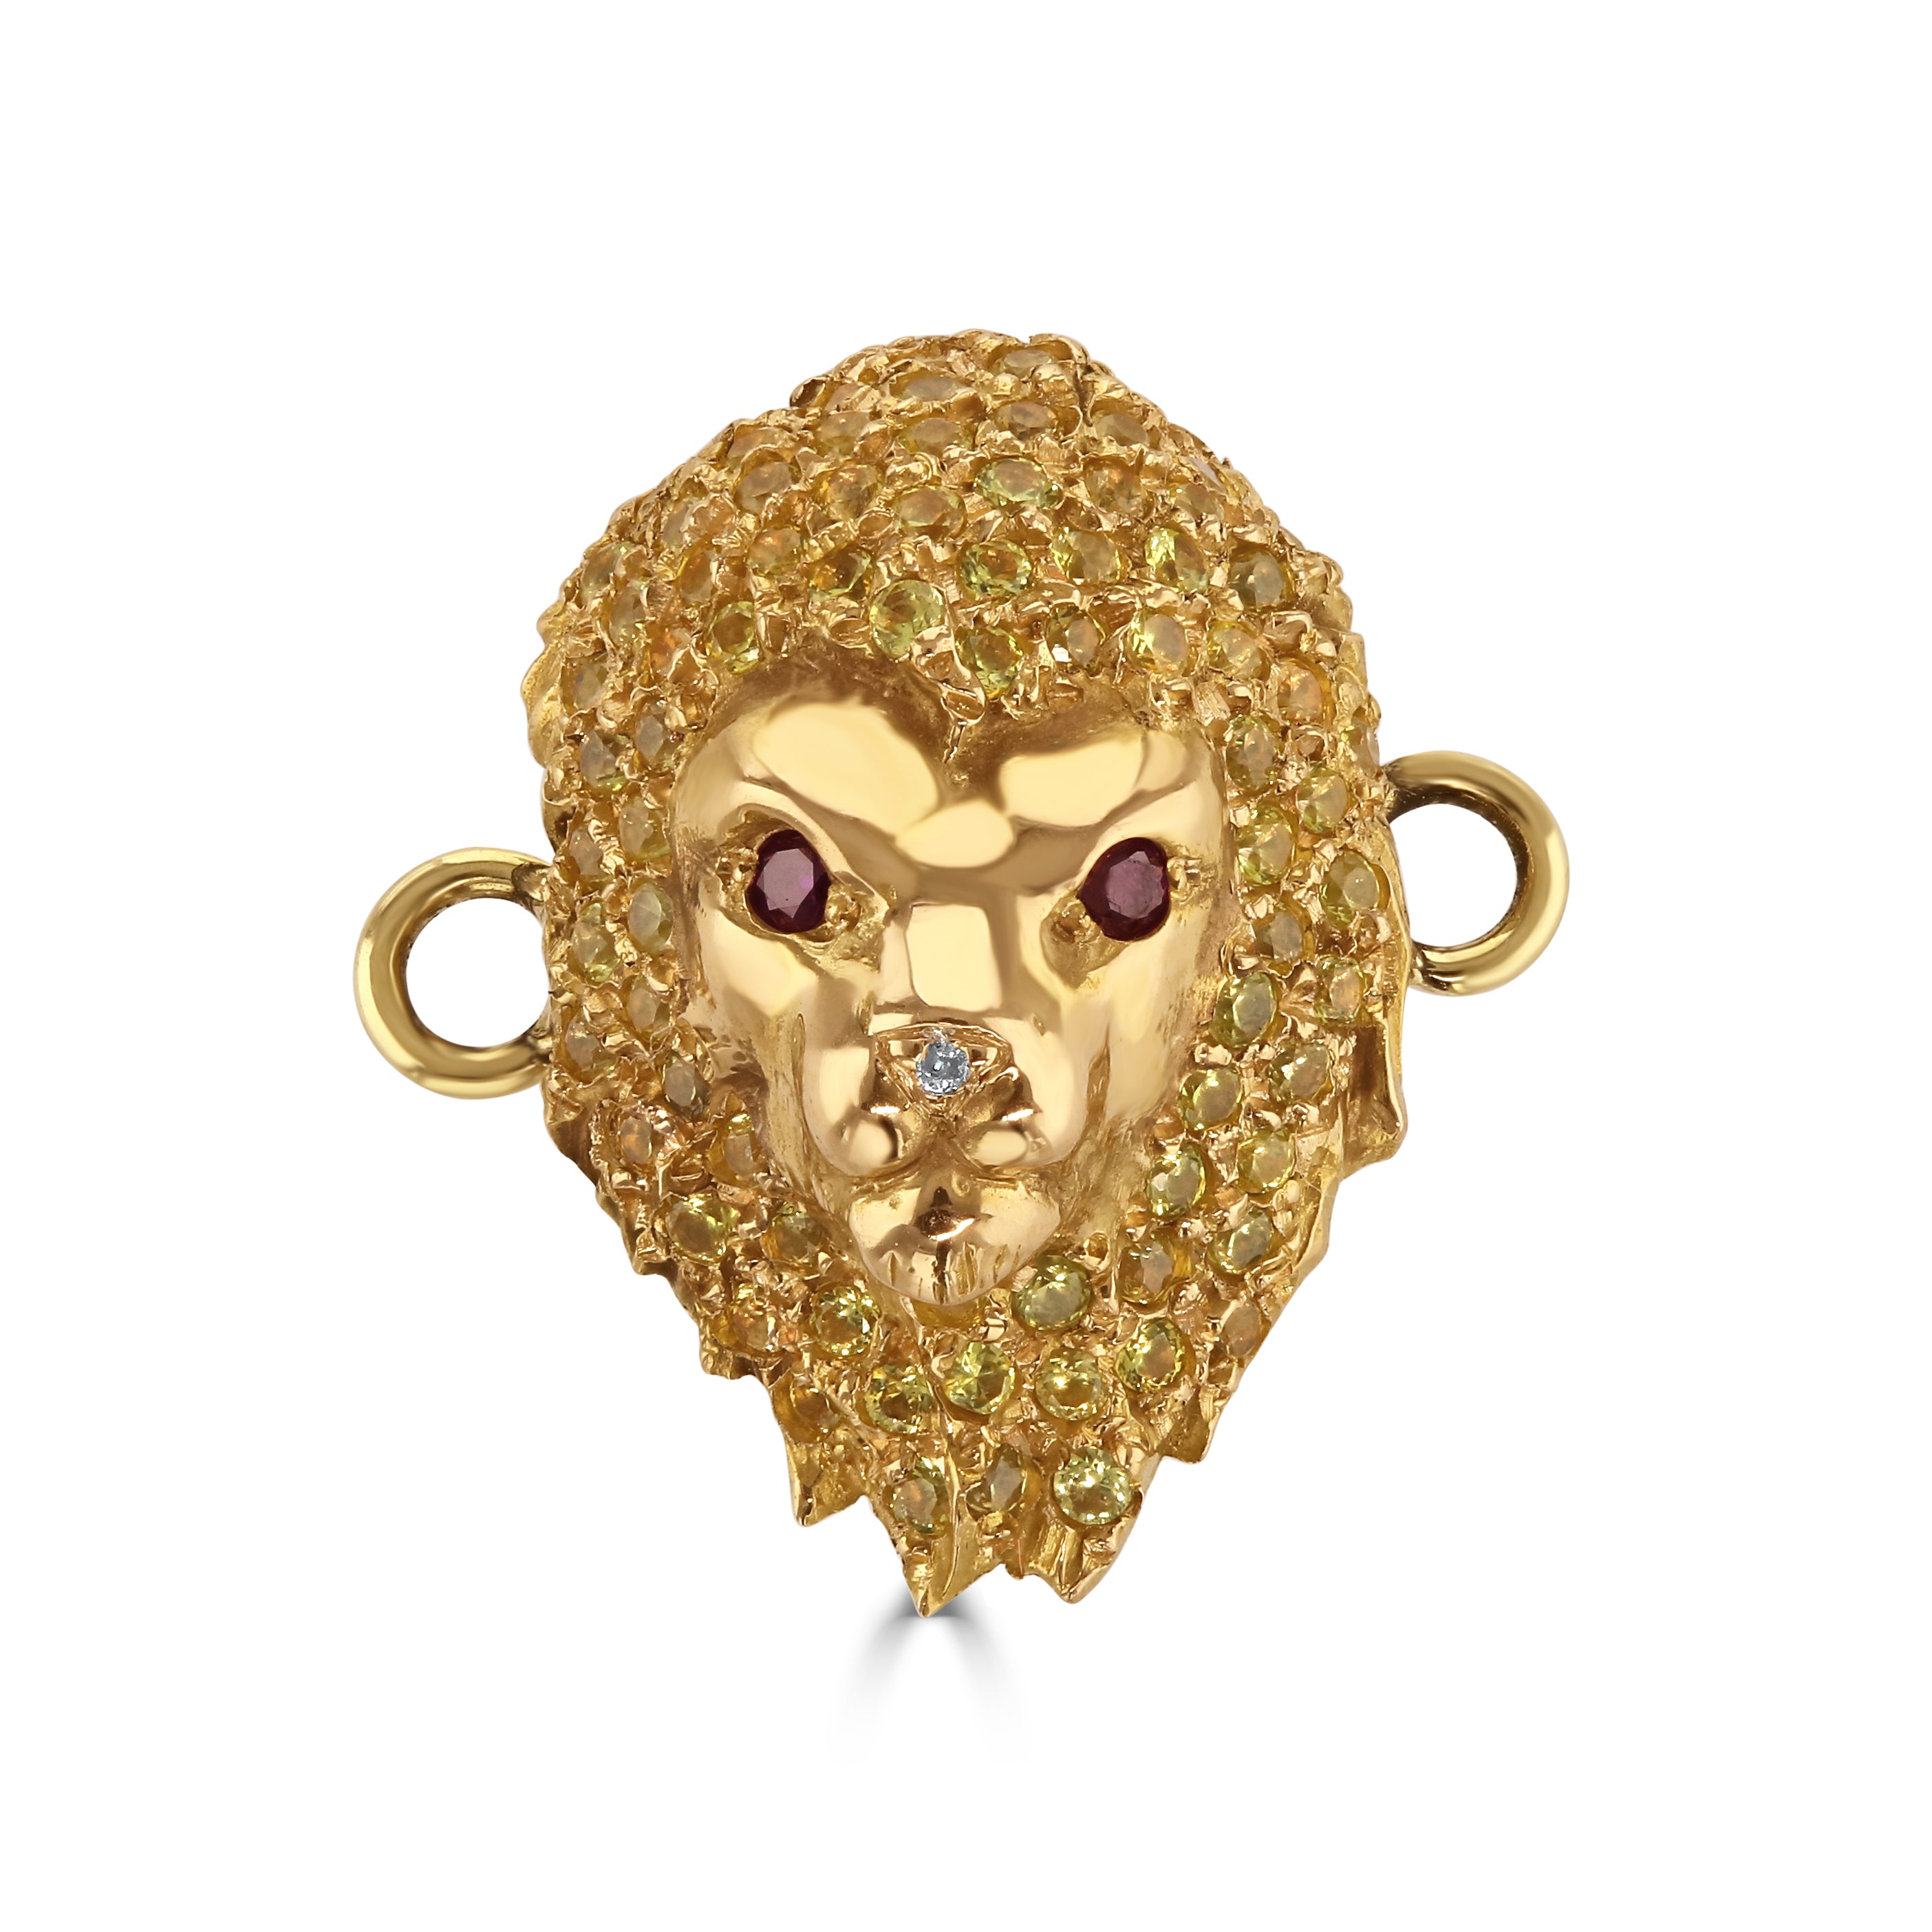 18ct gold Lion charm